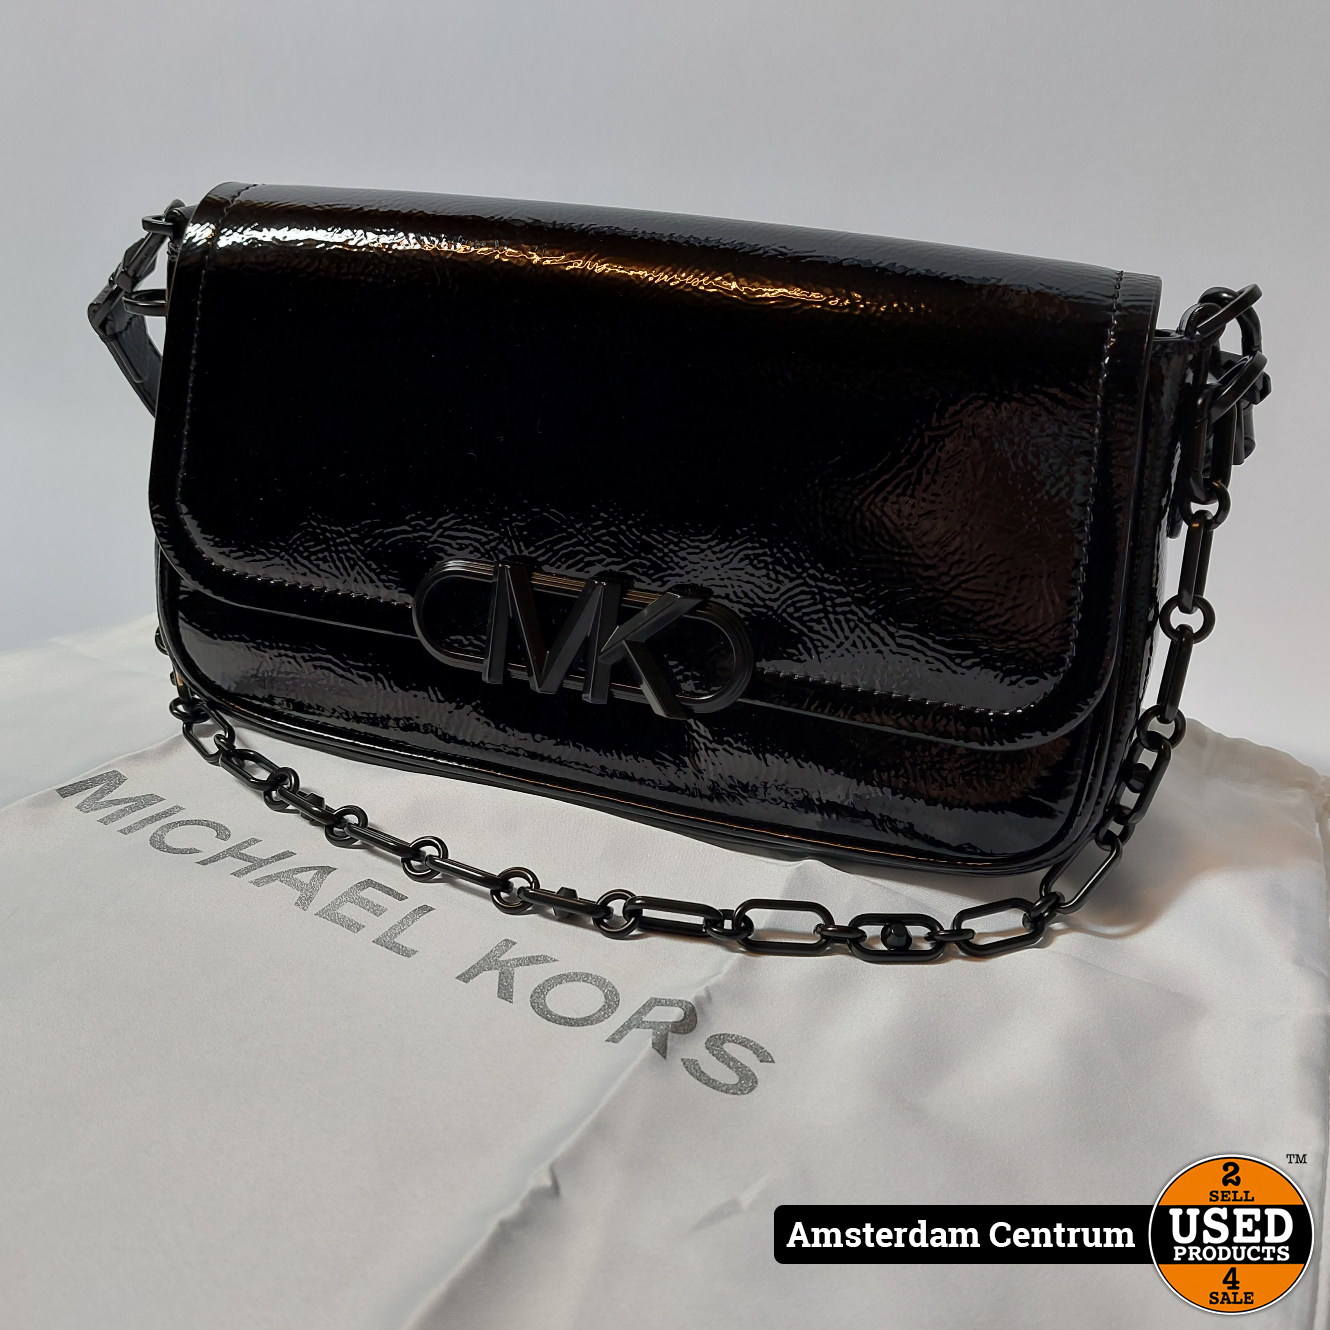 annuleren echtgenoot Diverse MICHAEL KORS Parker Medium Crinkled Patent Leather Shoulder Bag - Nieuw -  Used Products Amsterdam Centrum